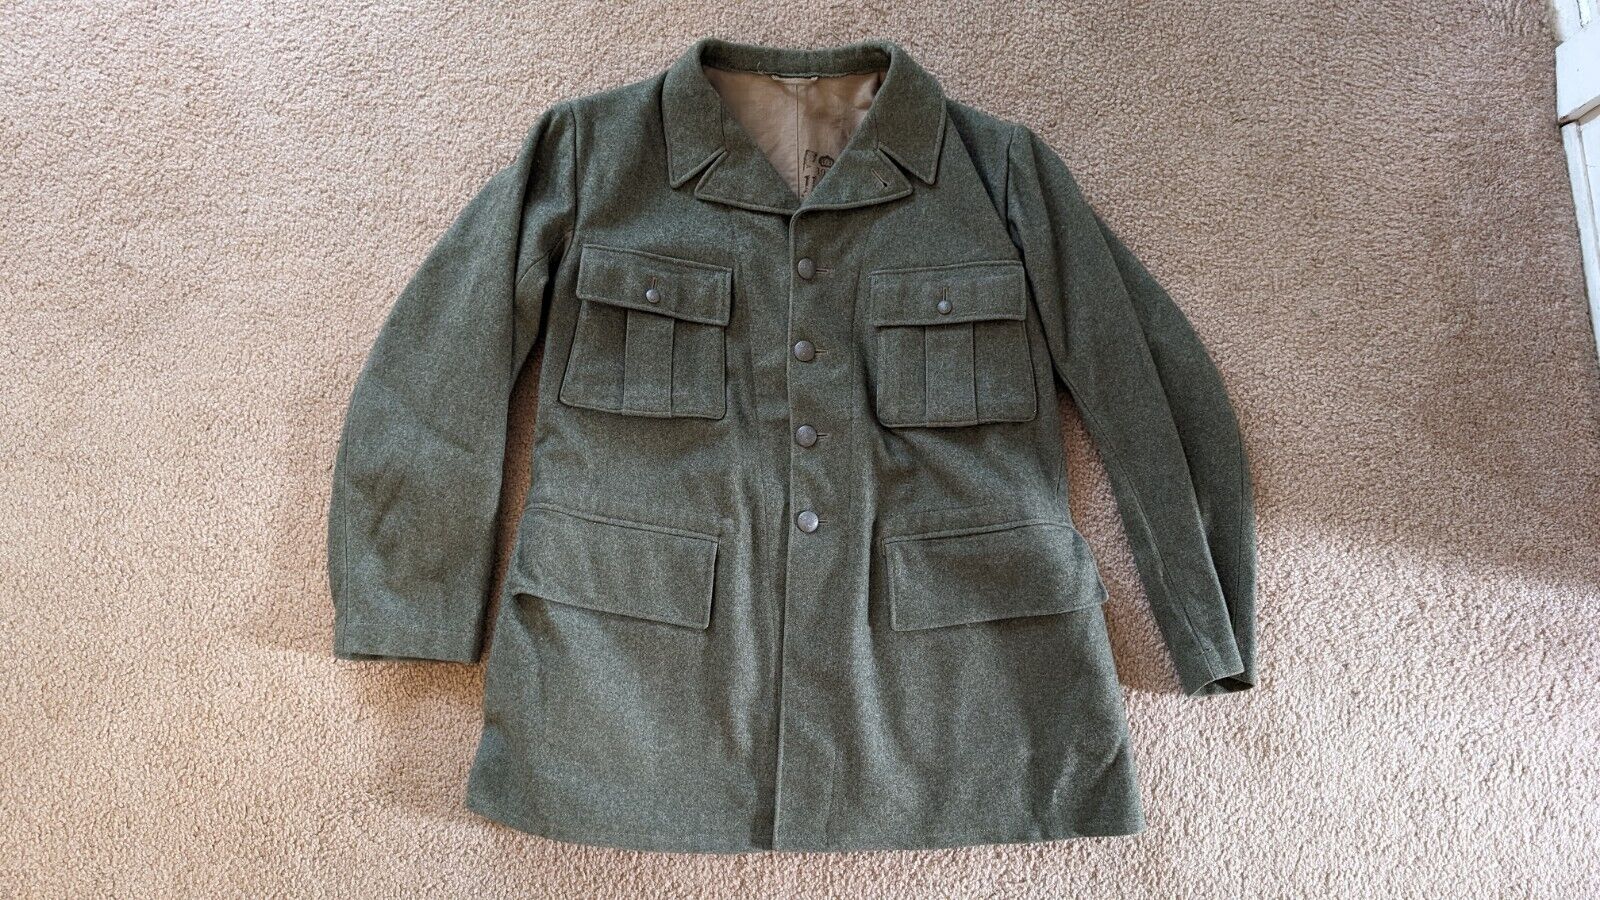 WWII Vintage Military Swedish Wool Uniform 1941 1942 Field Jacket Coat